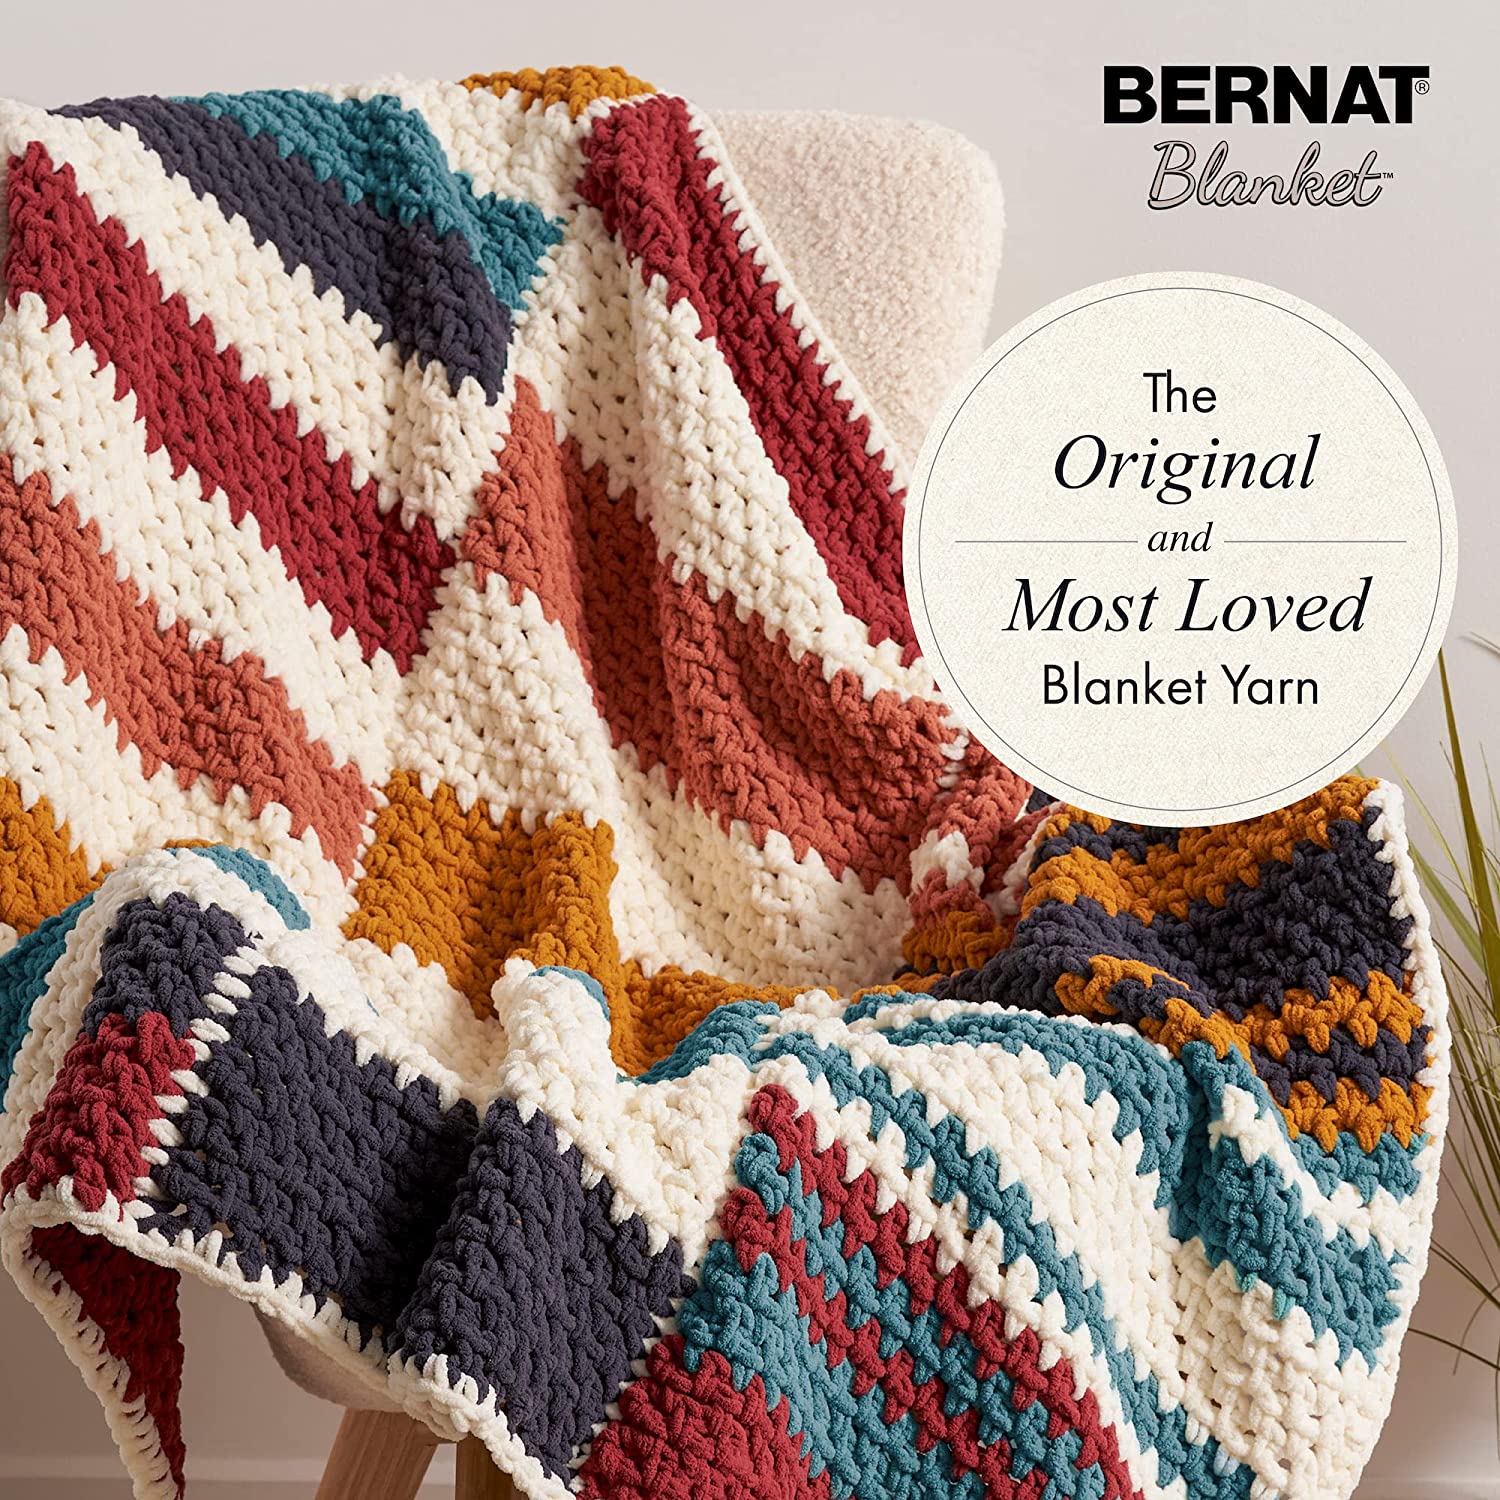 Bernat Blanket Smoky Green Yarn - 2 Pack of 300g/10.5oz - Polyester - 6  Super Bulky - 220 Yards - Knitting/Crochet